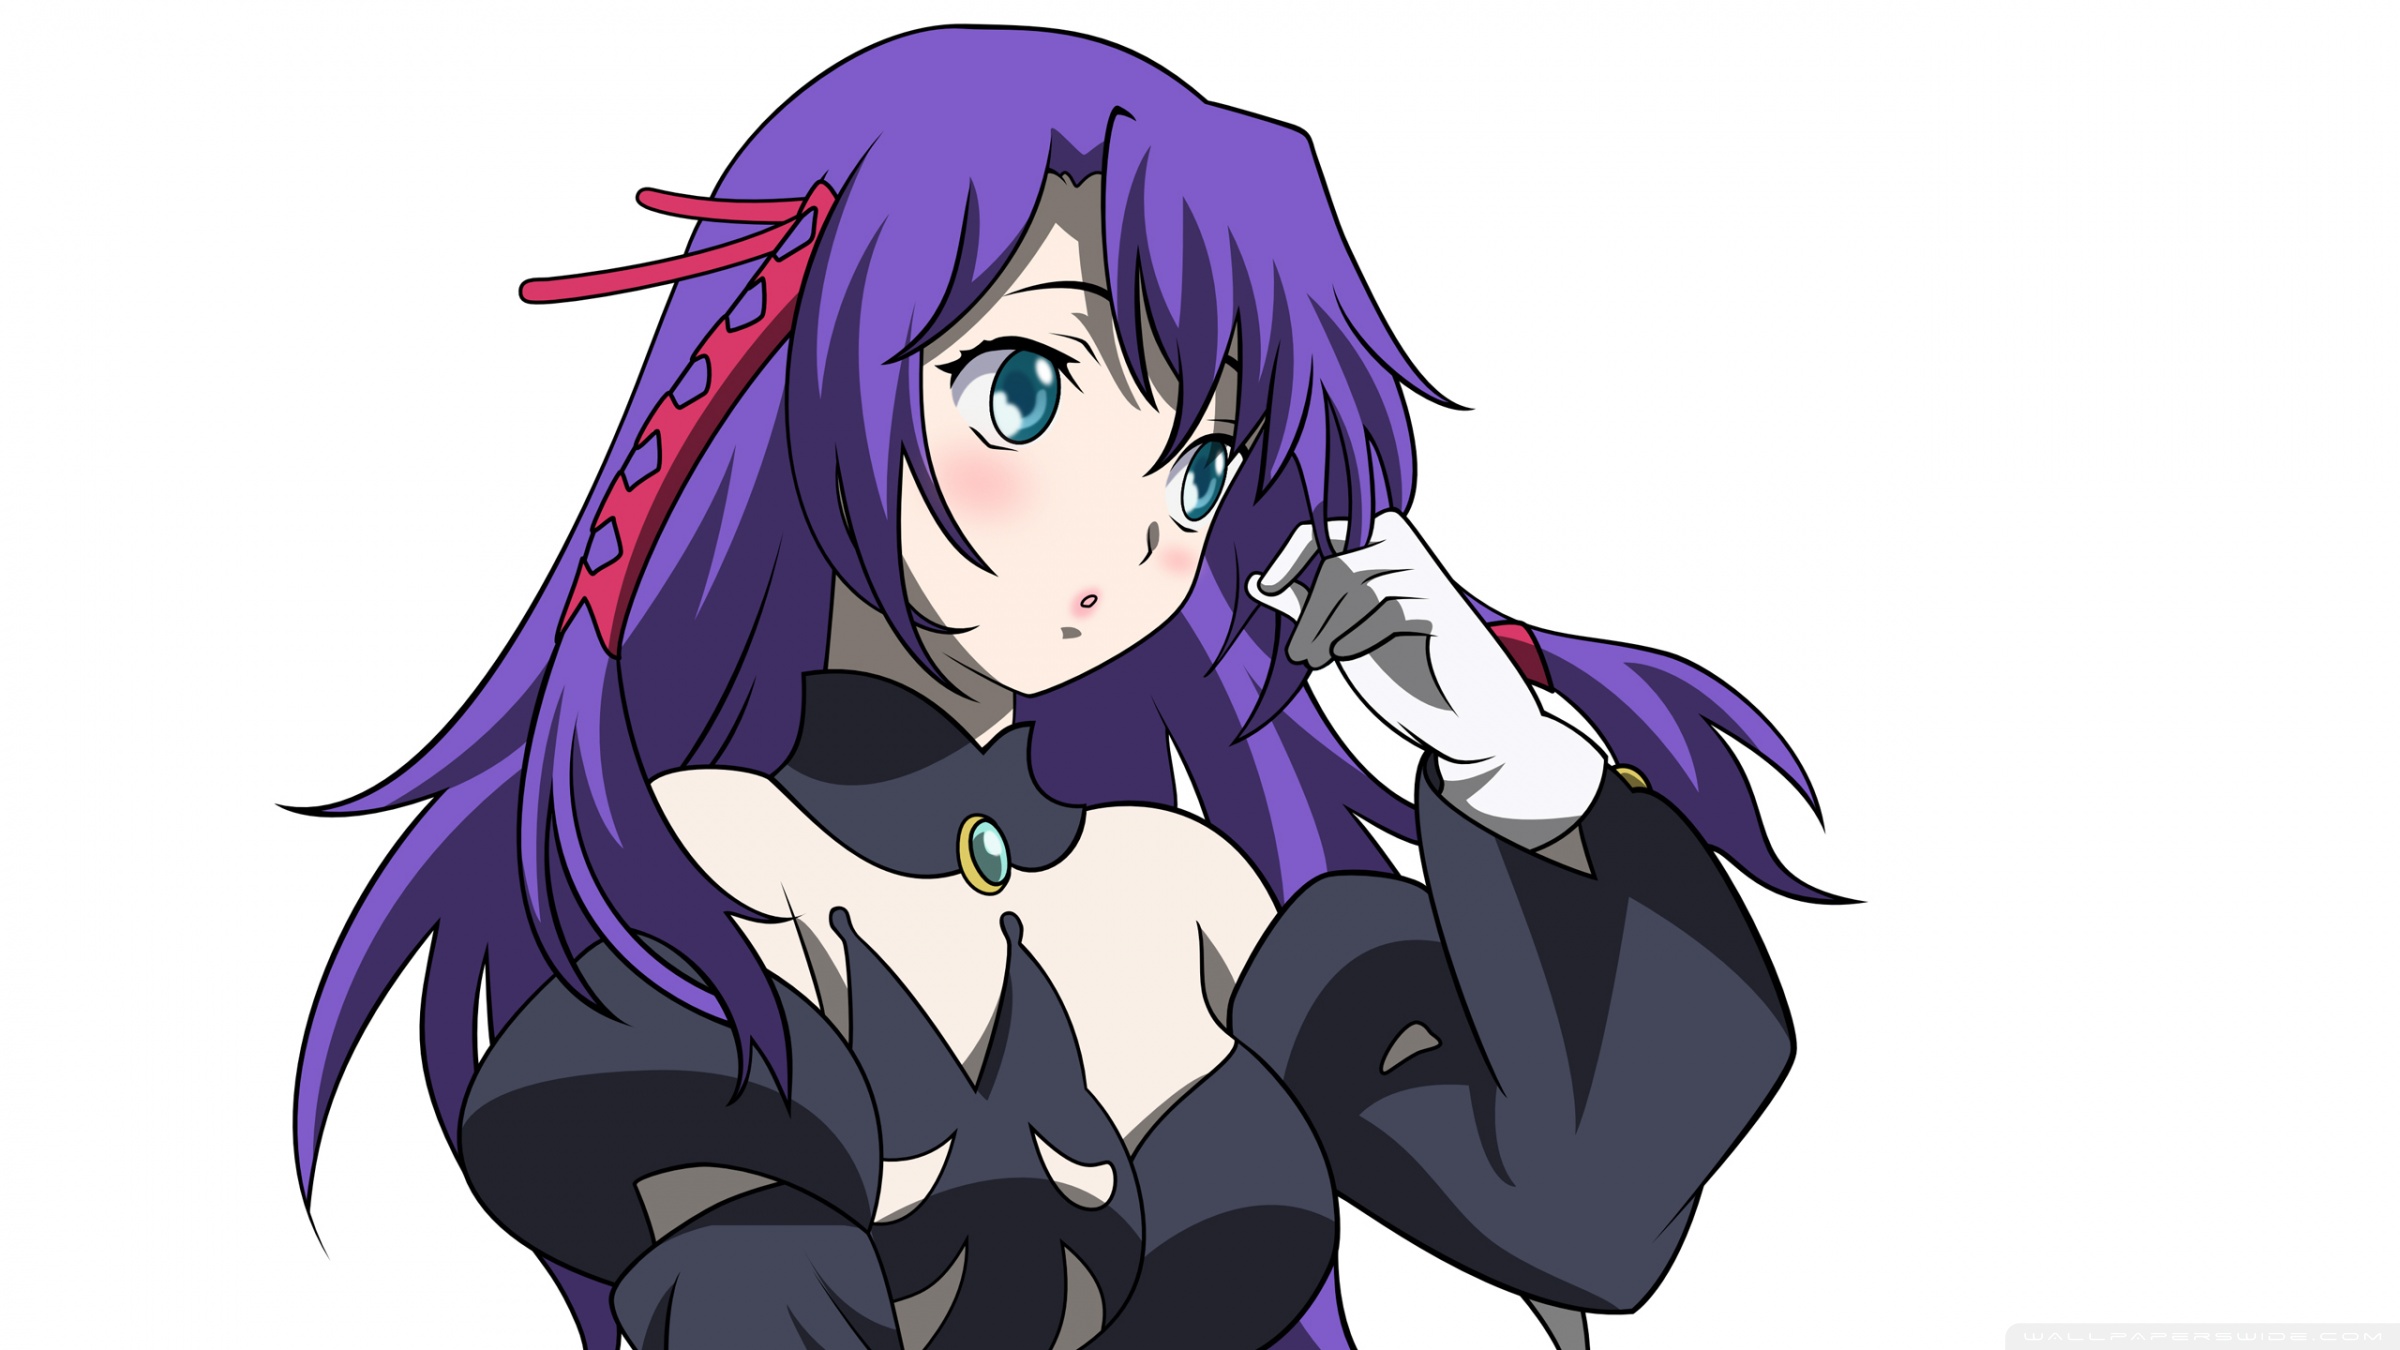 Anime Girl With Purple Hair Ultra HD Desktop Background Wallpaper for 4K UHD TV, Tablet